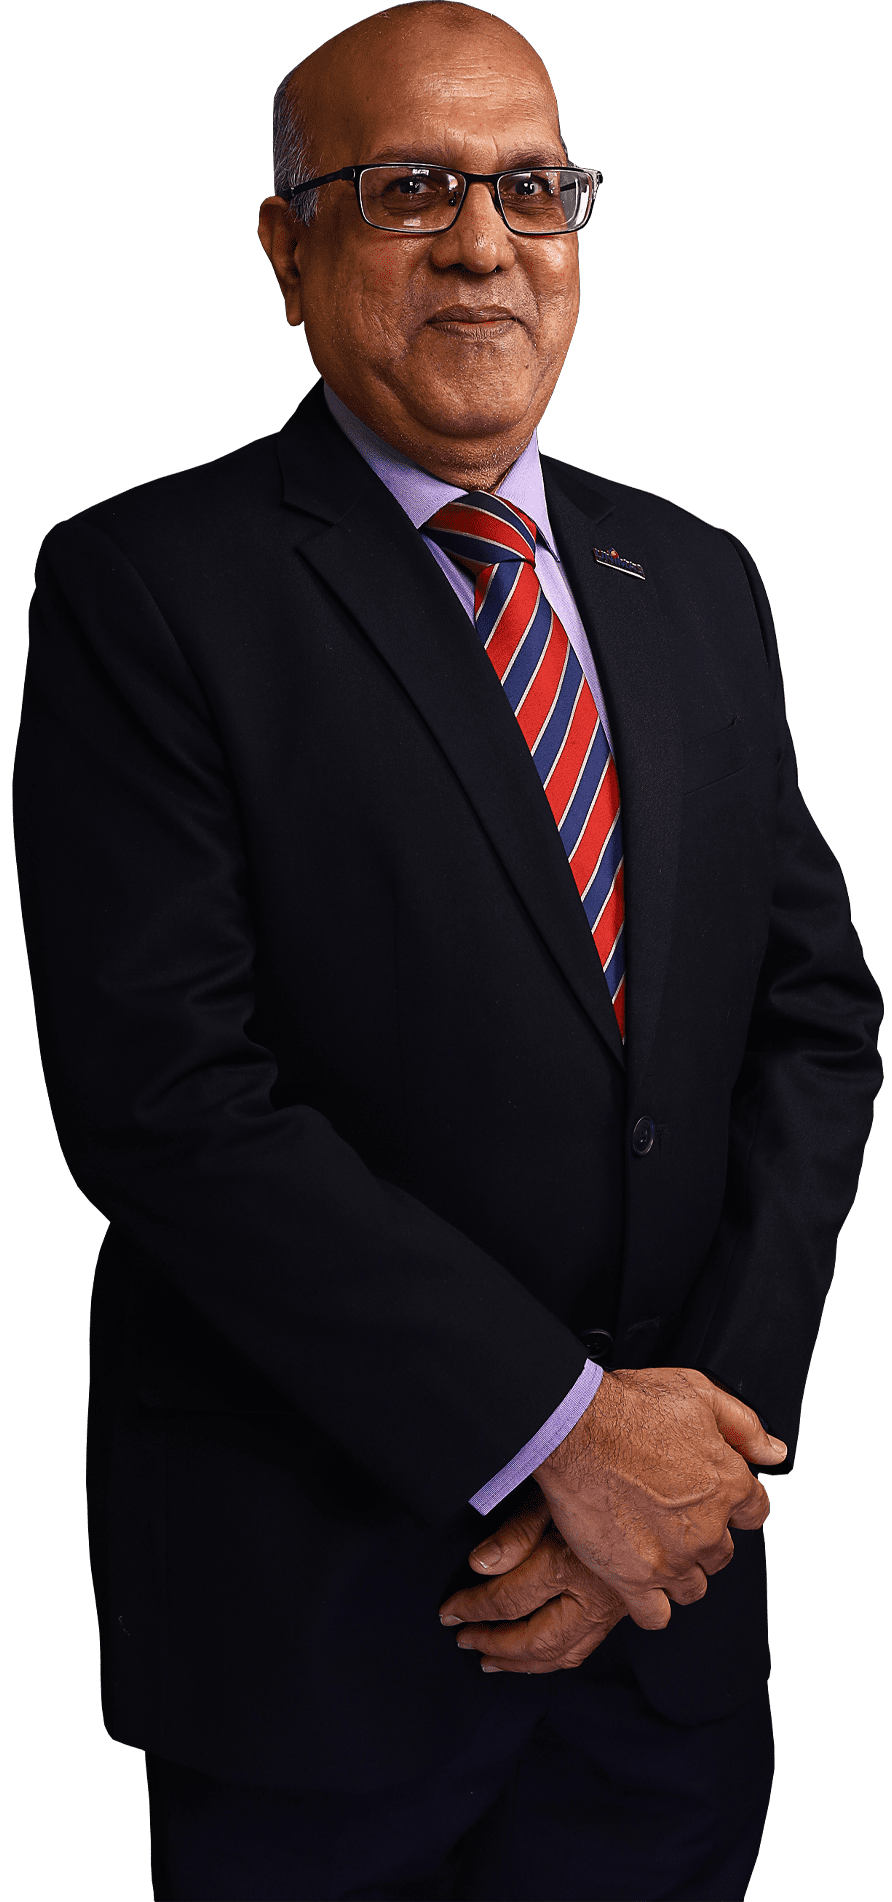 Professor Dr Fasihuddin Bin Badruddin Ahmad